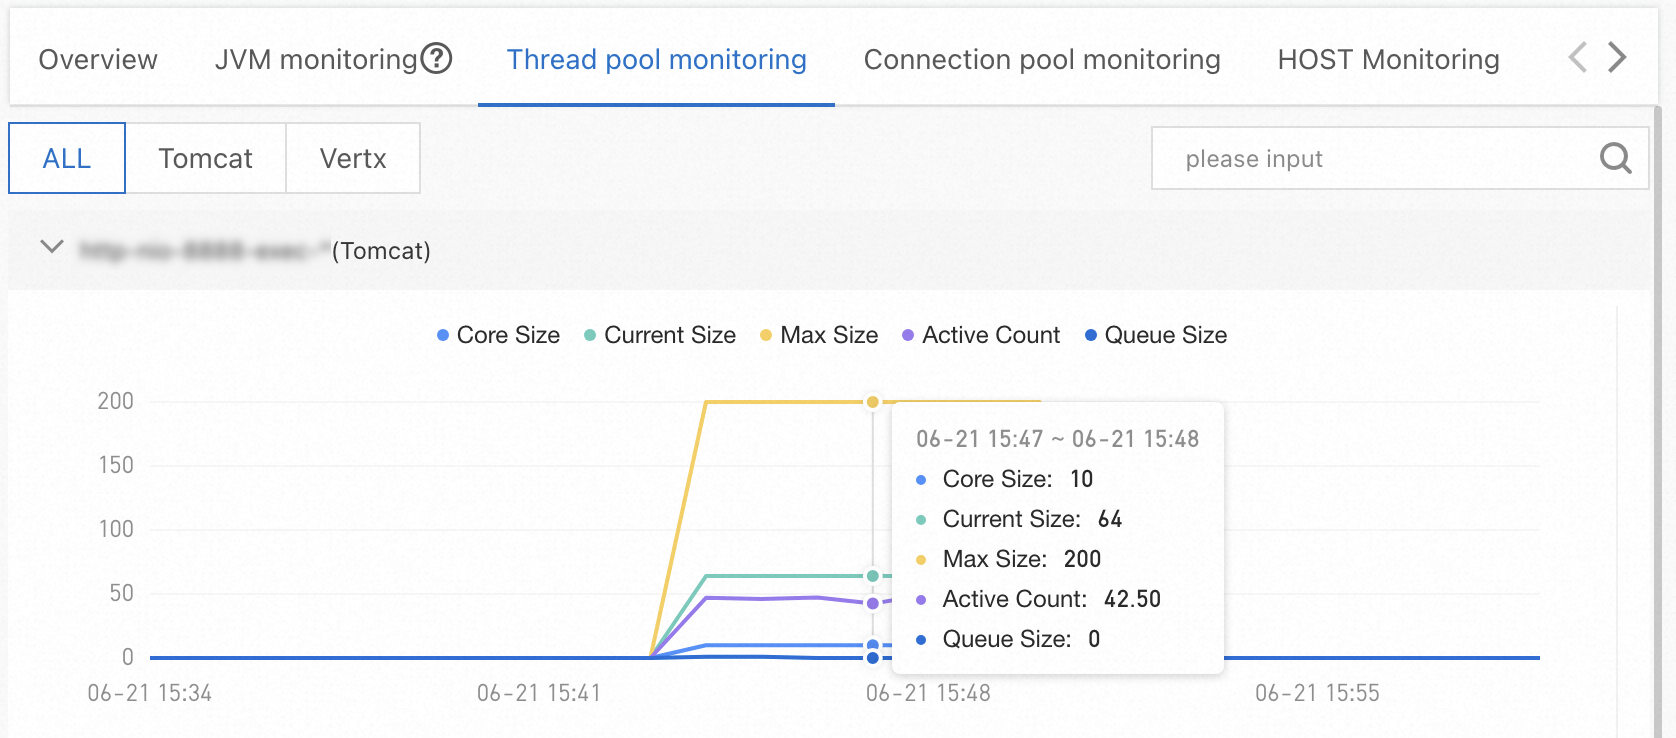 Thread pool monitoring